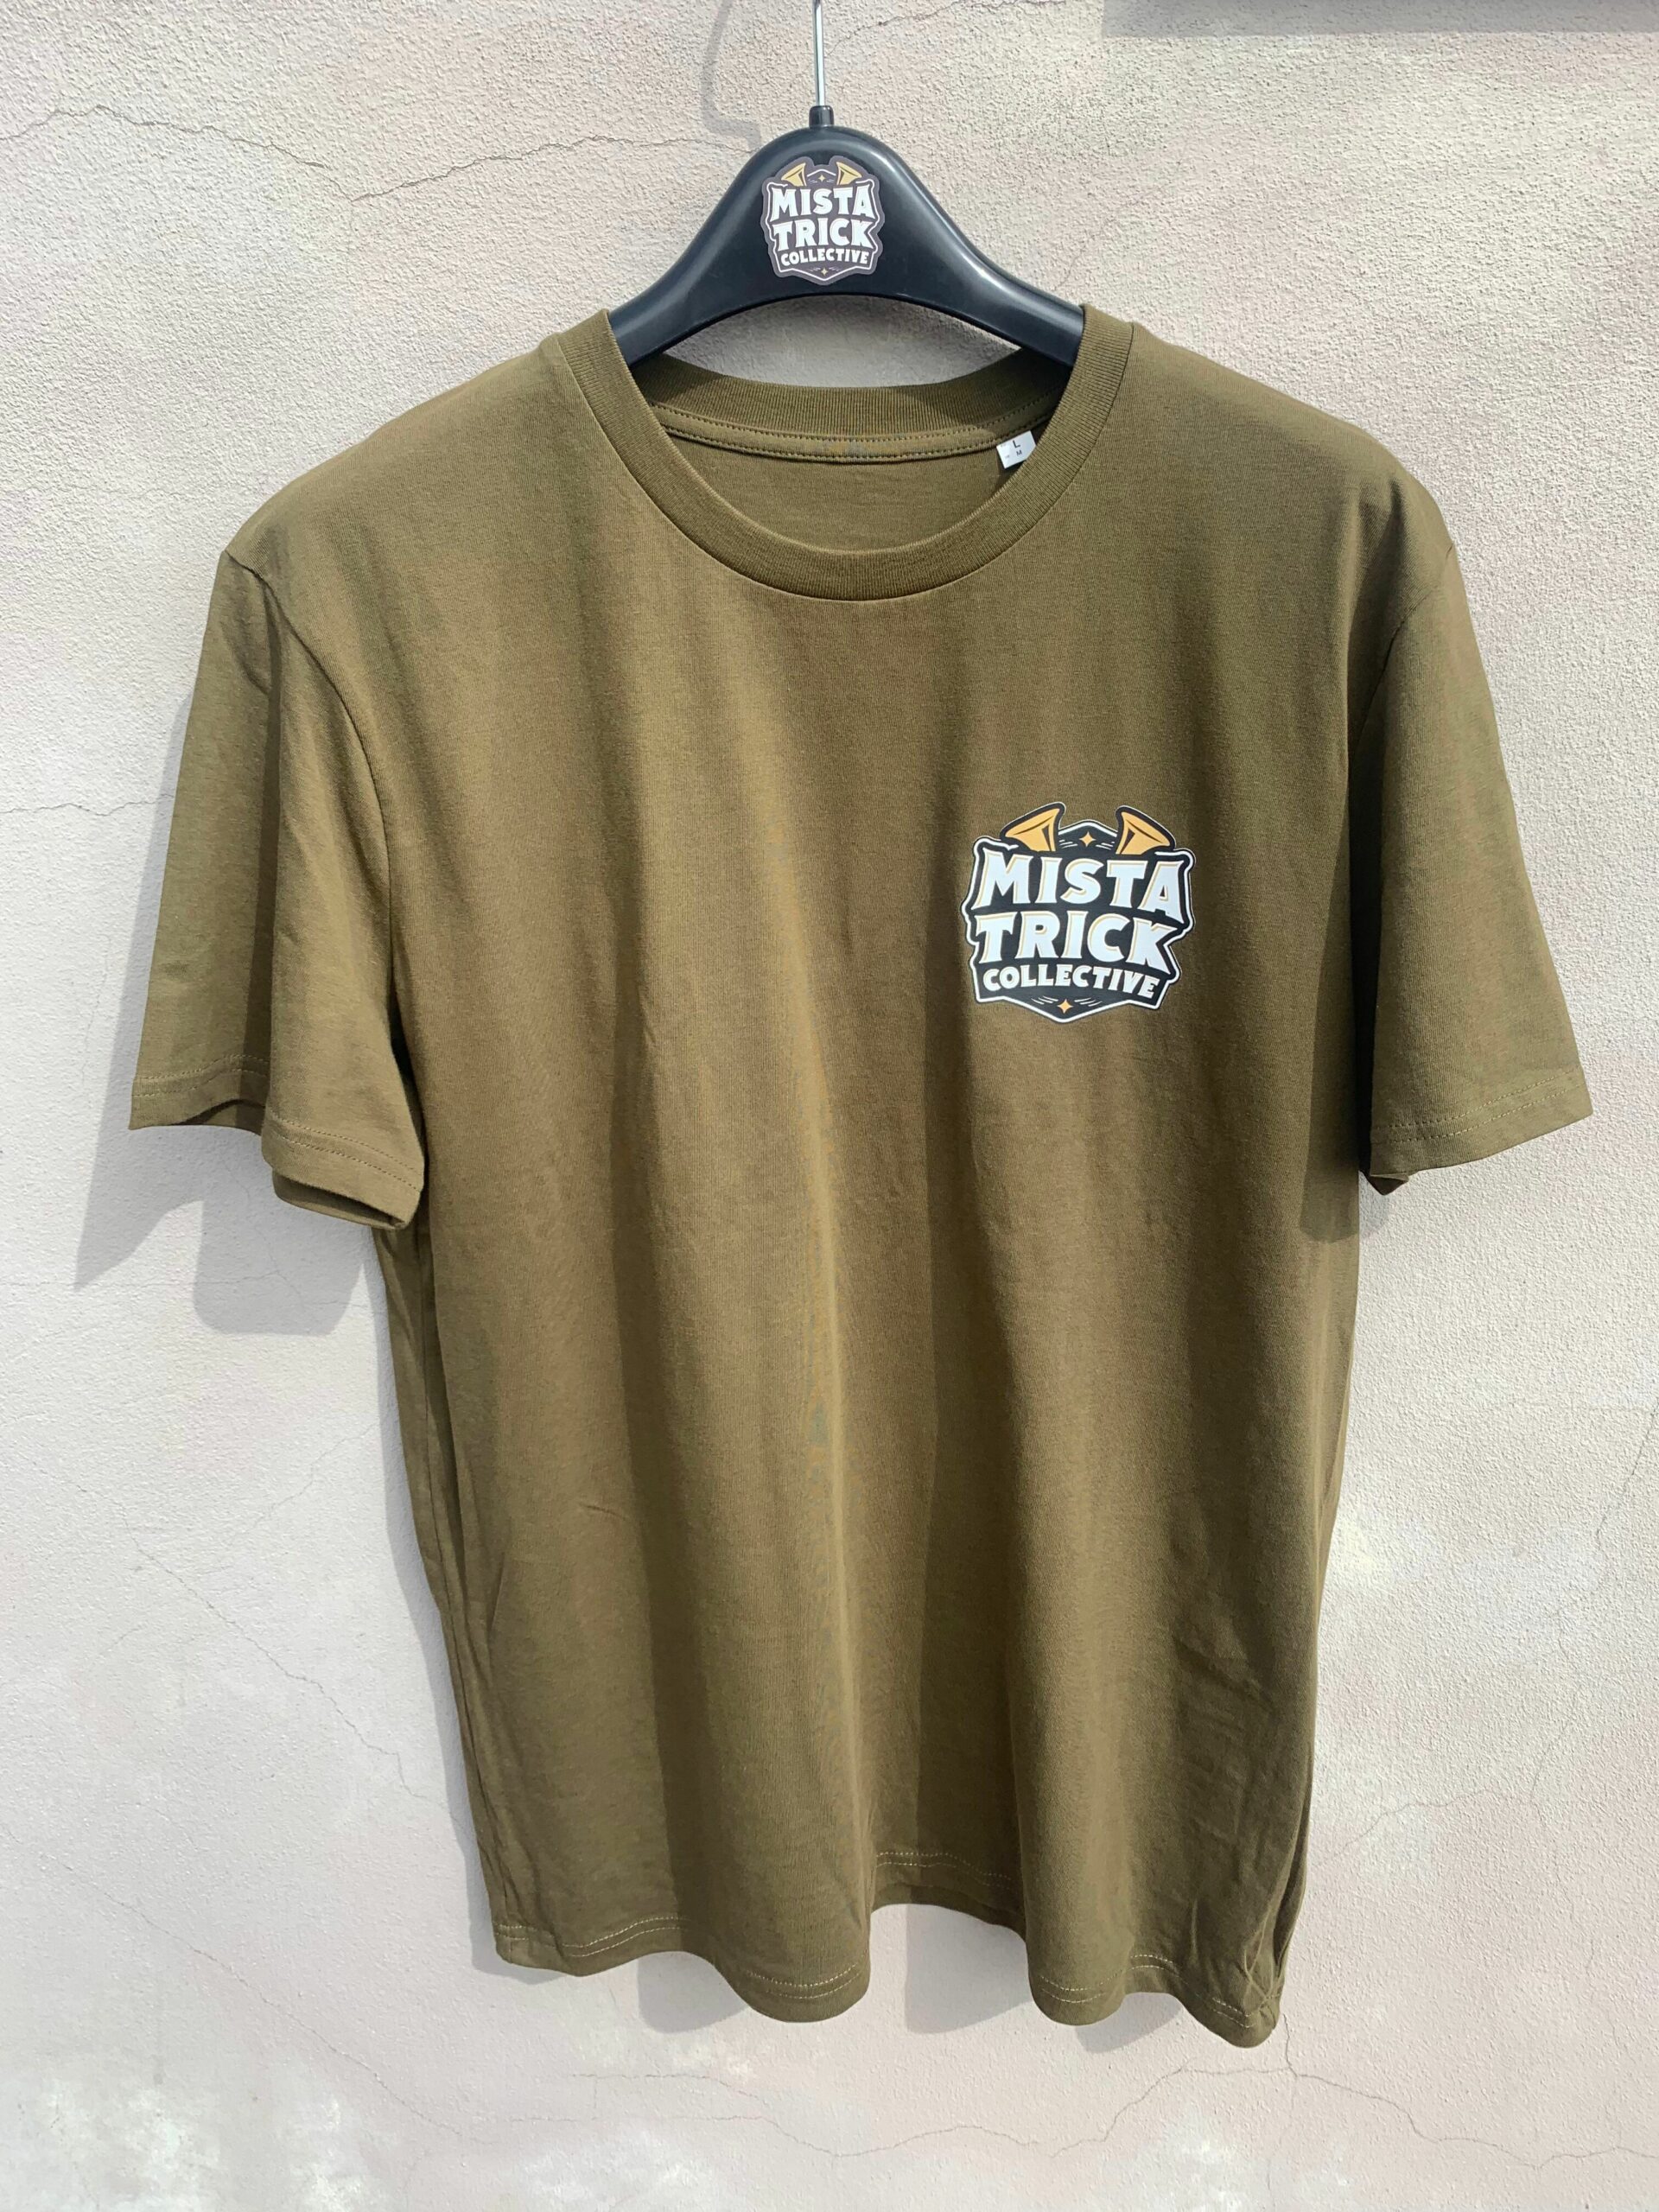 Mista Trick Collective T-Shirt Size: Extra Large (Khaki)